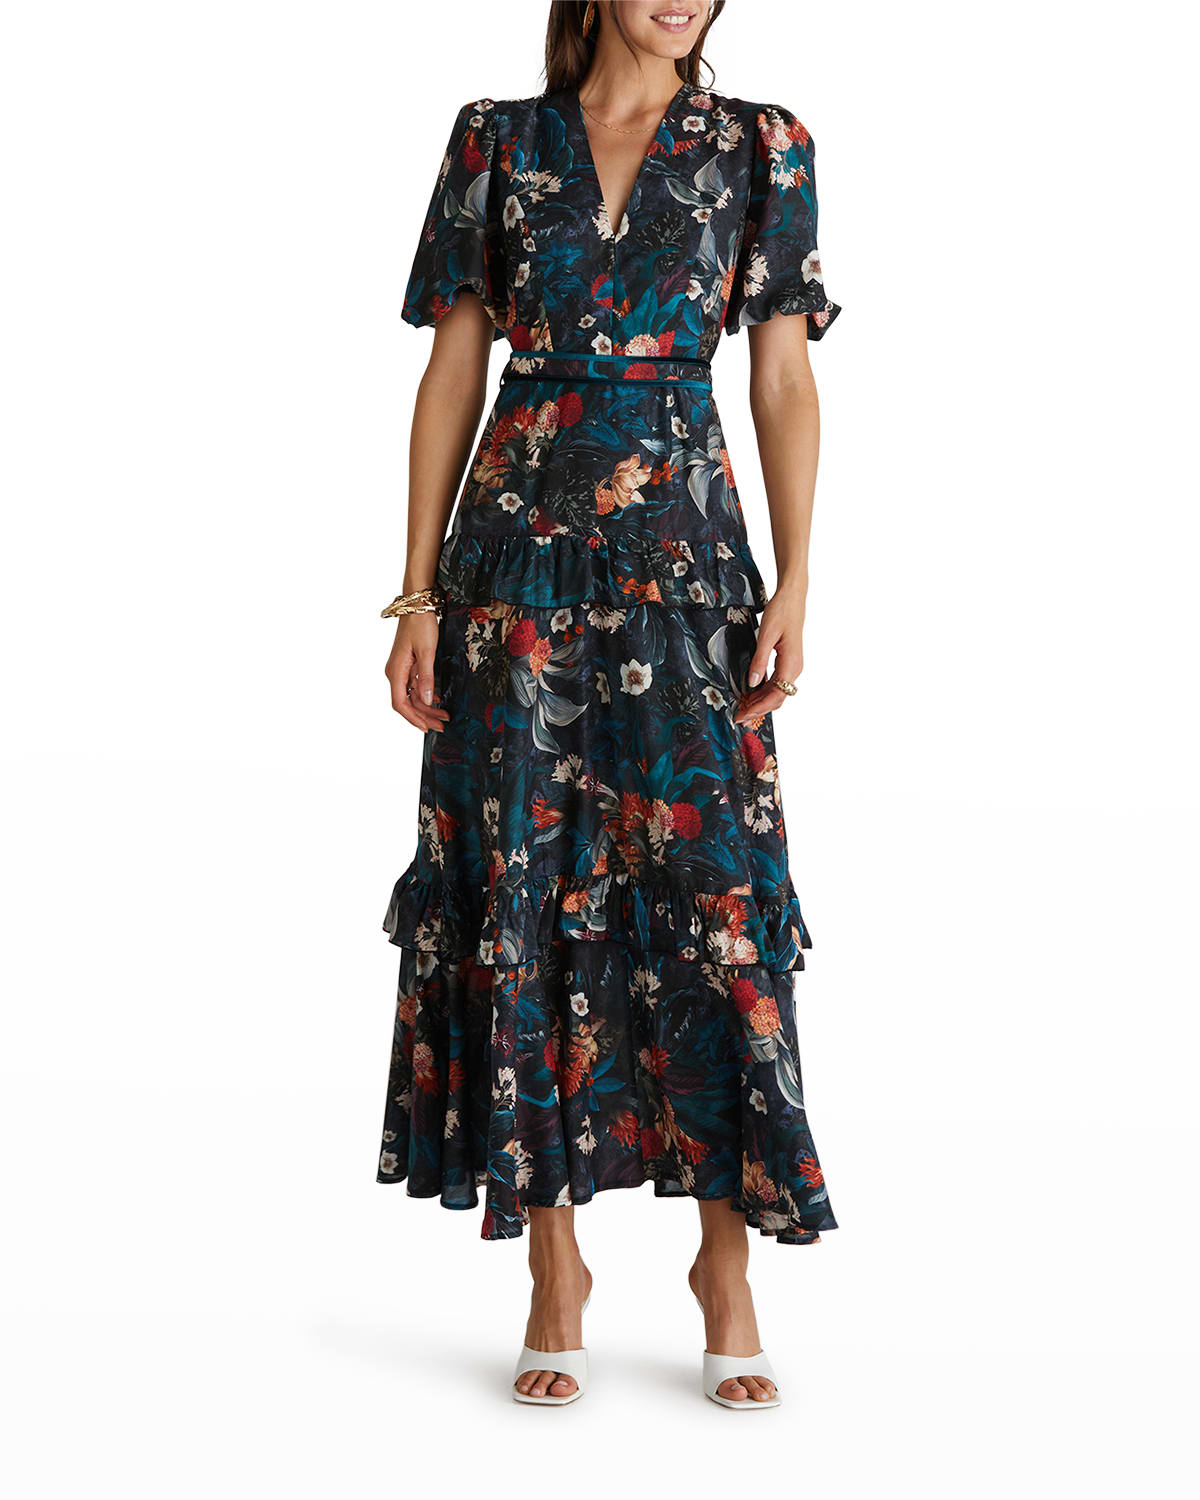 Cynthia Rowley Sleeveless Polka Dot Ruffle Maxi Dress | Neiman Marcus